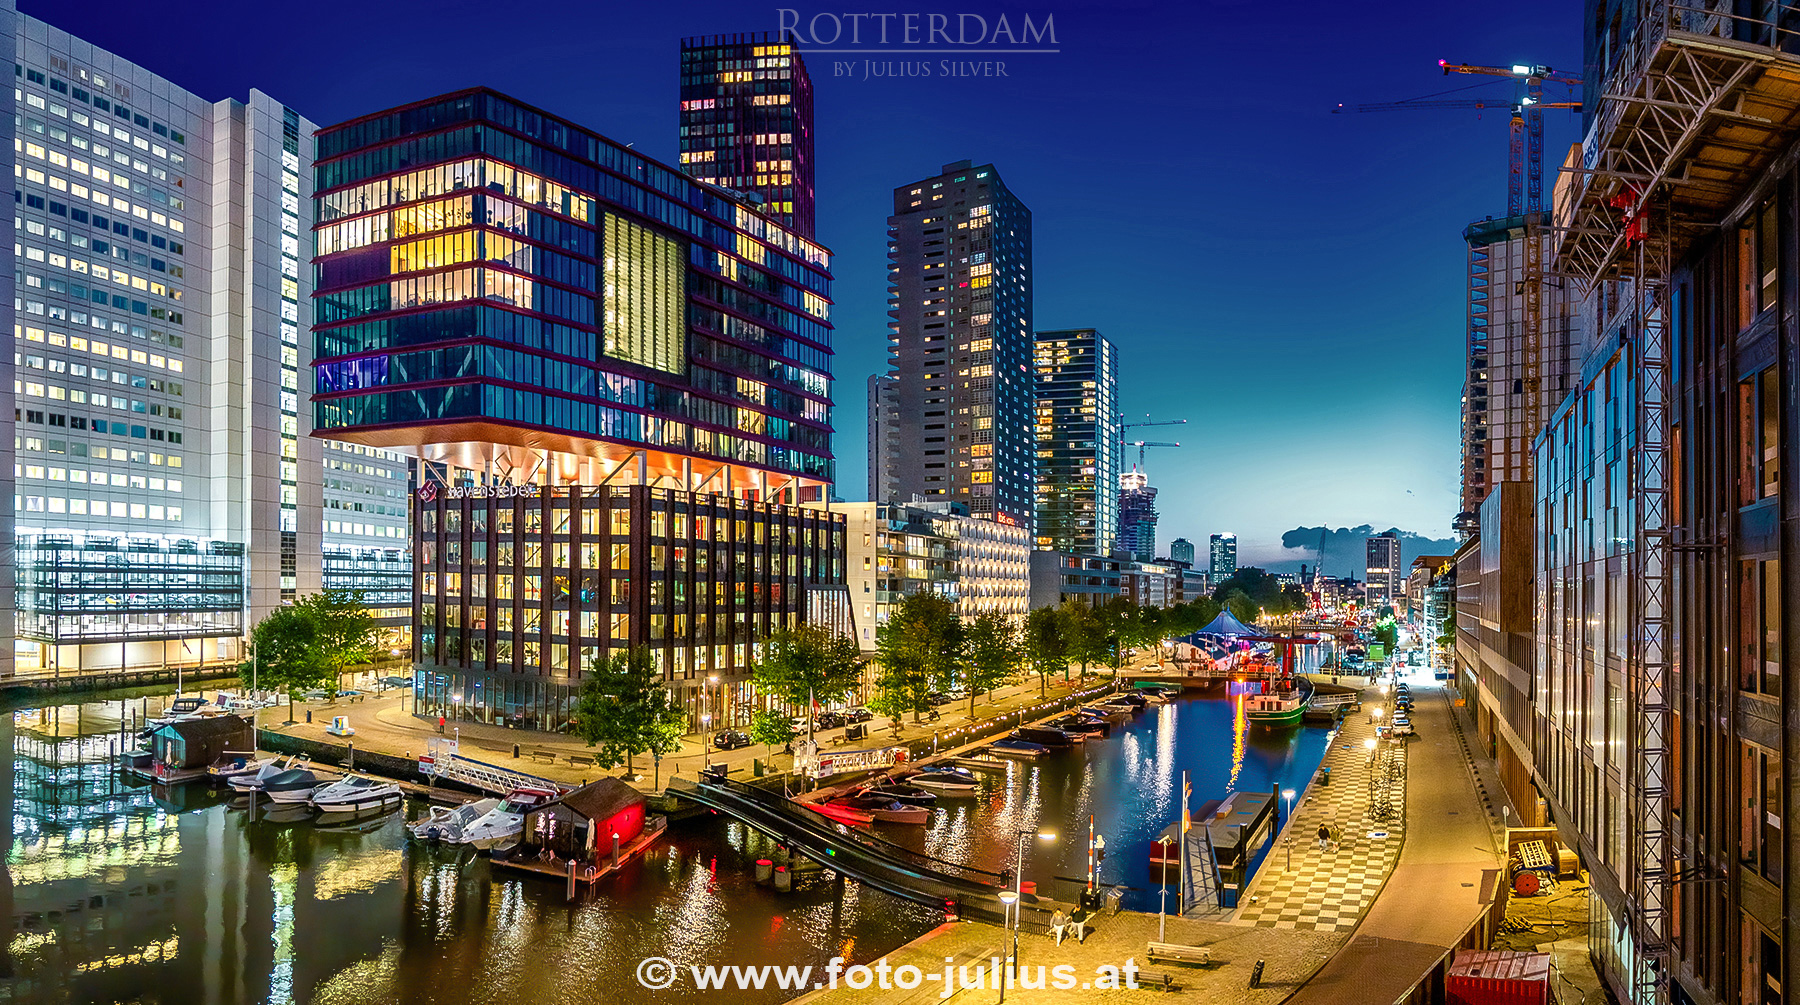 Rotterdam_007a.jpg, 2,3MB